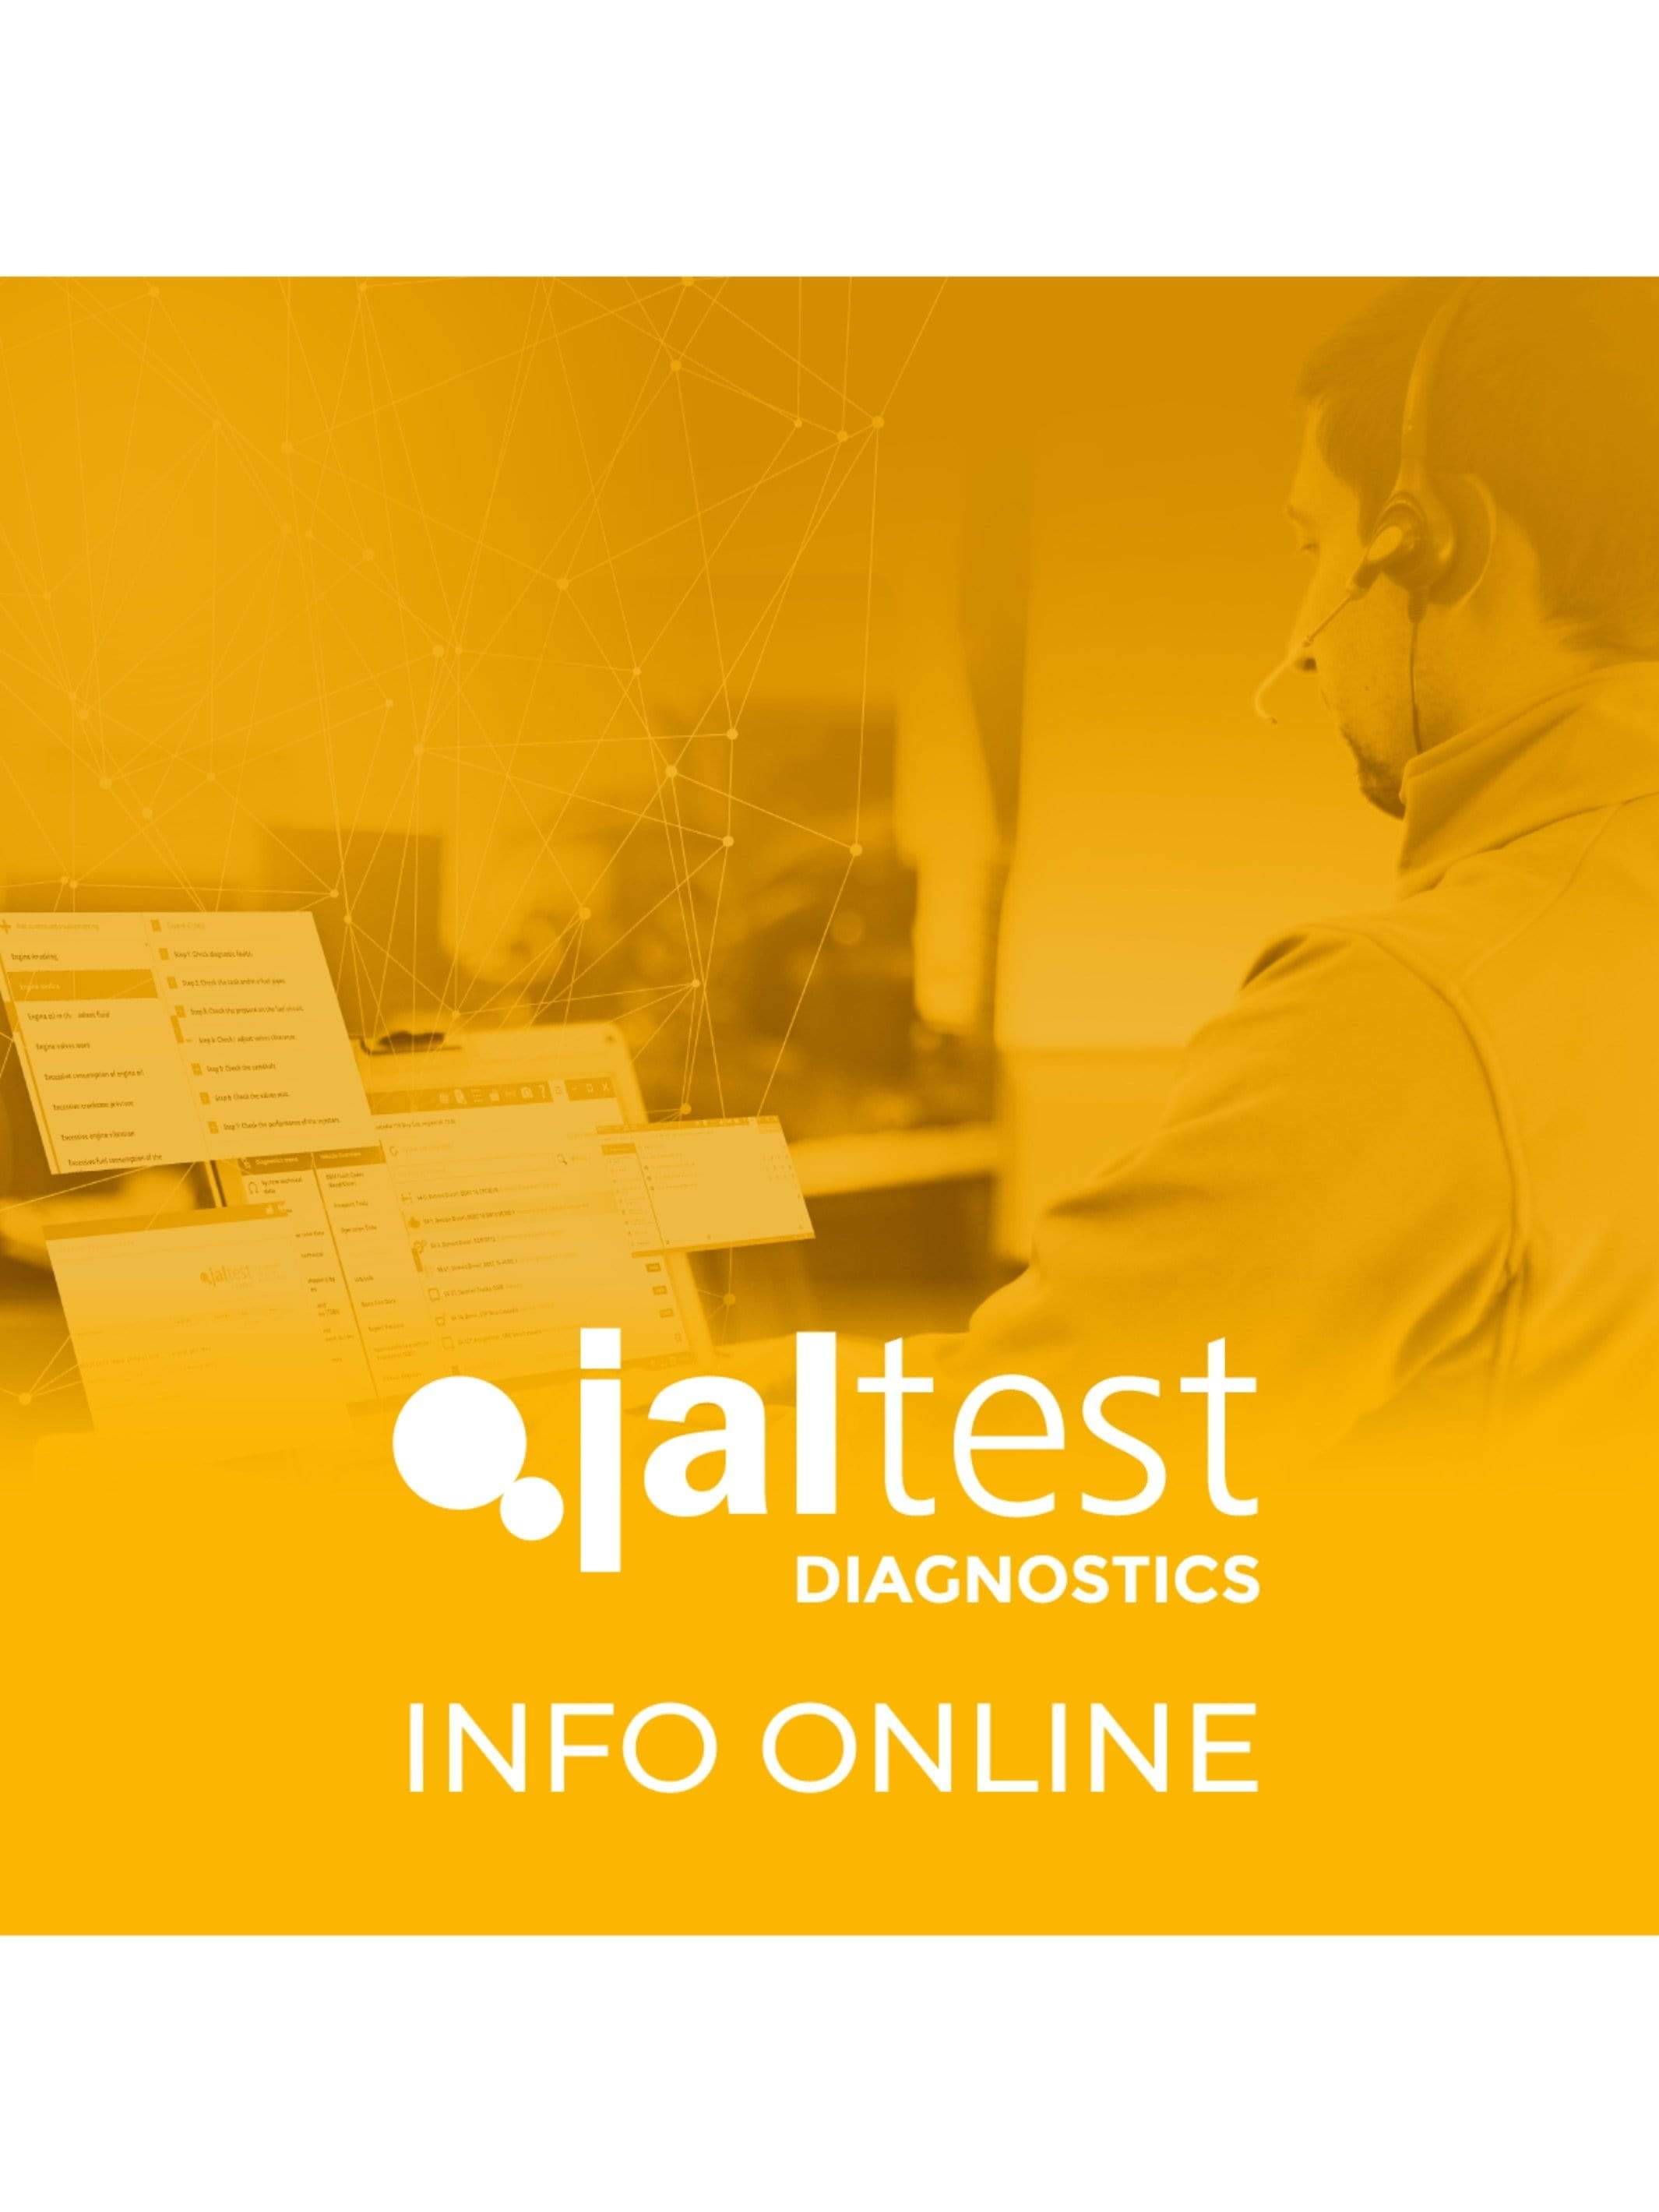 Jaltest Off Highway Diagnostic Software Info - Jaltest Construction, Off Highway, MH Heavy Equipment & Stationary Engine Diagnostic Tool Kit